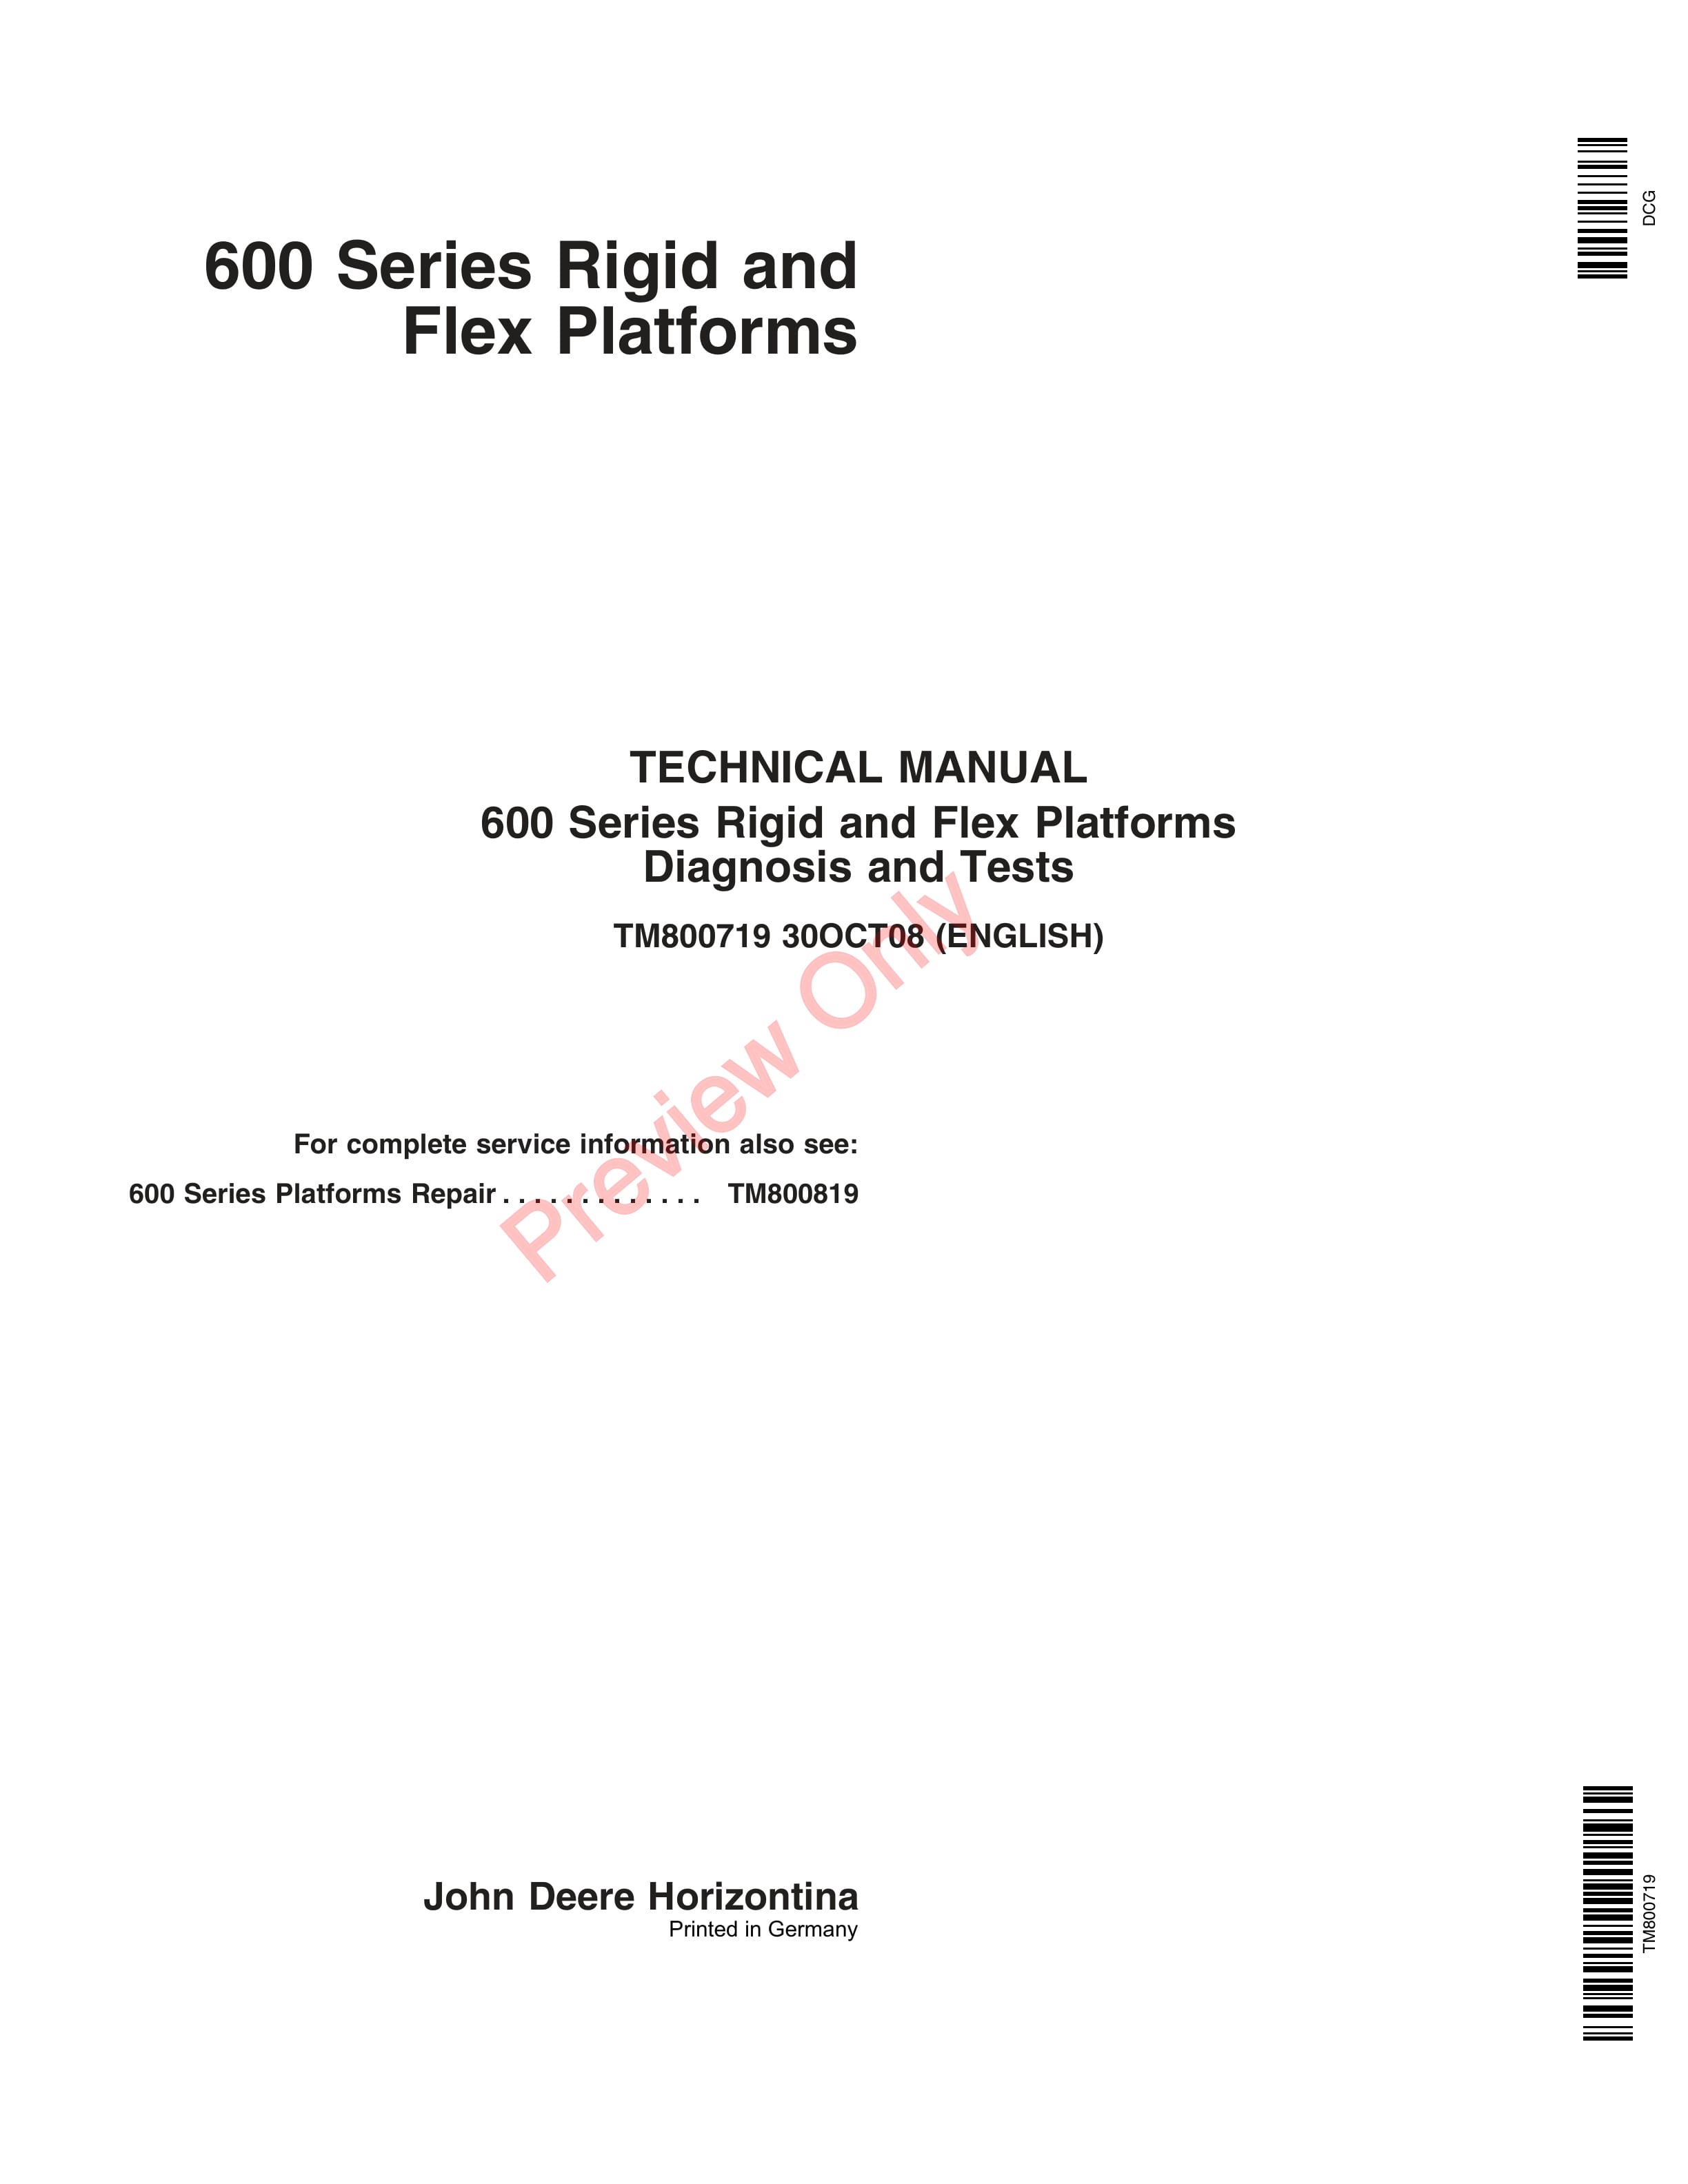 John Deere 600 Series Rigid and Flex Platforms Technical Manual TM800719 30OCT08 1